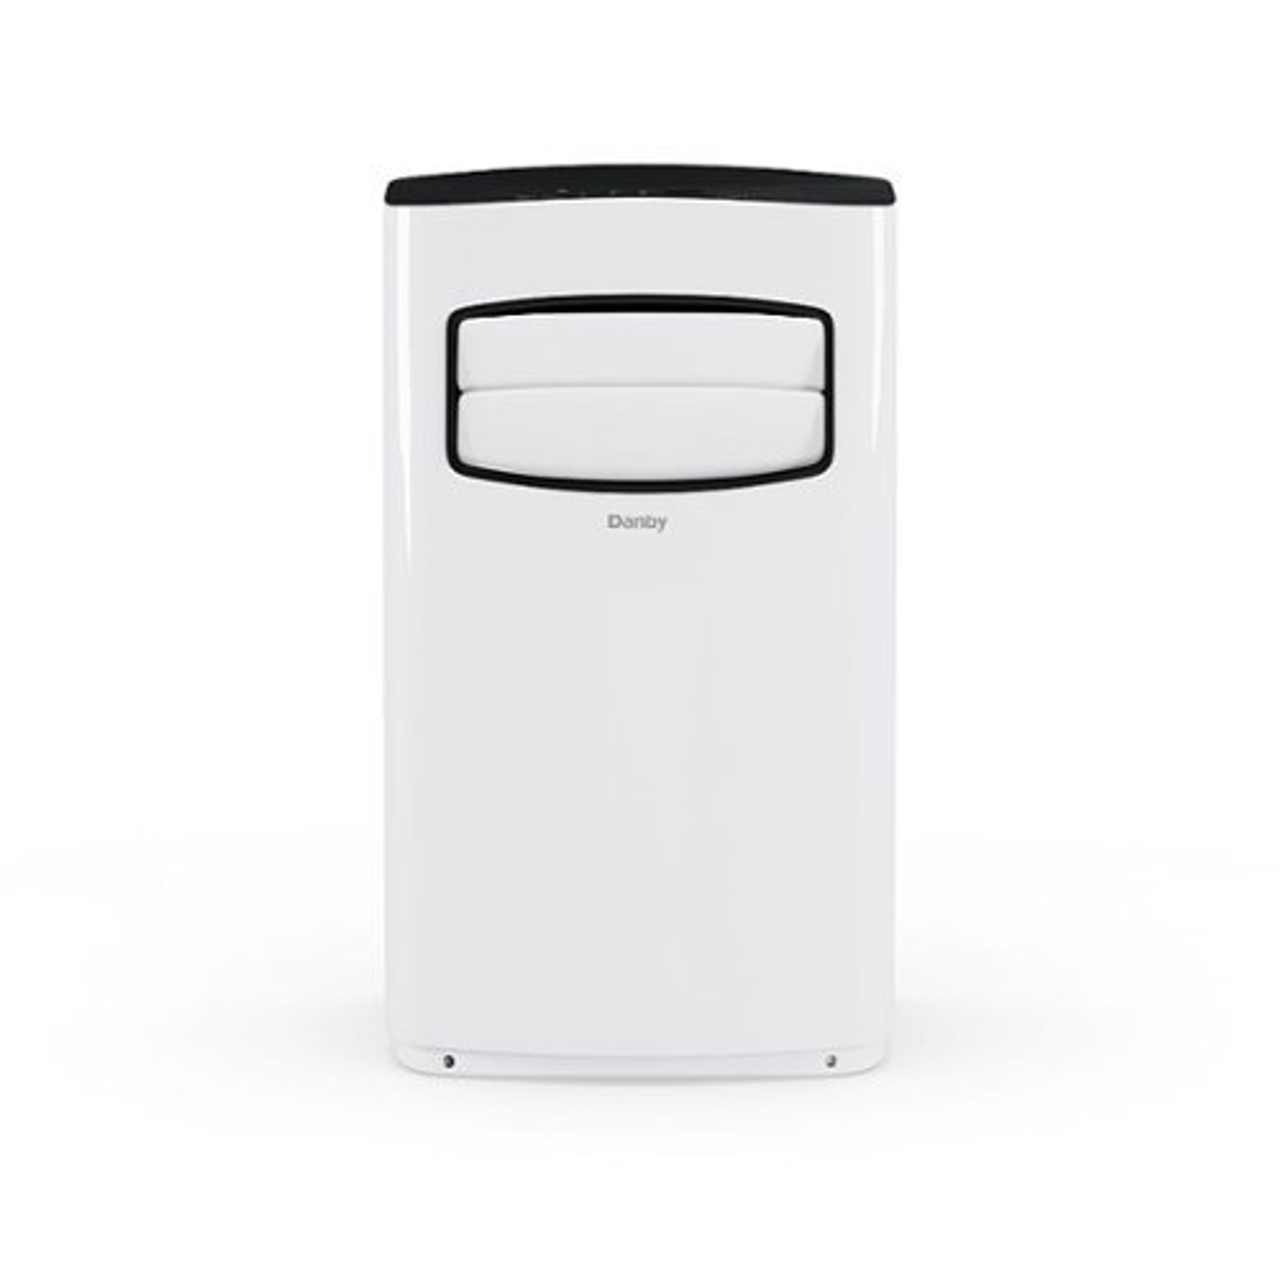 Danby - 10,000 BTU 3-in-1 Portable Air Conditioner - White